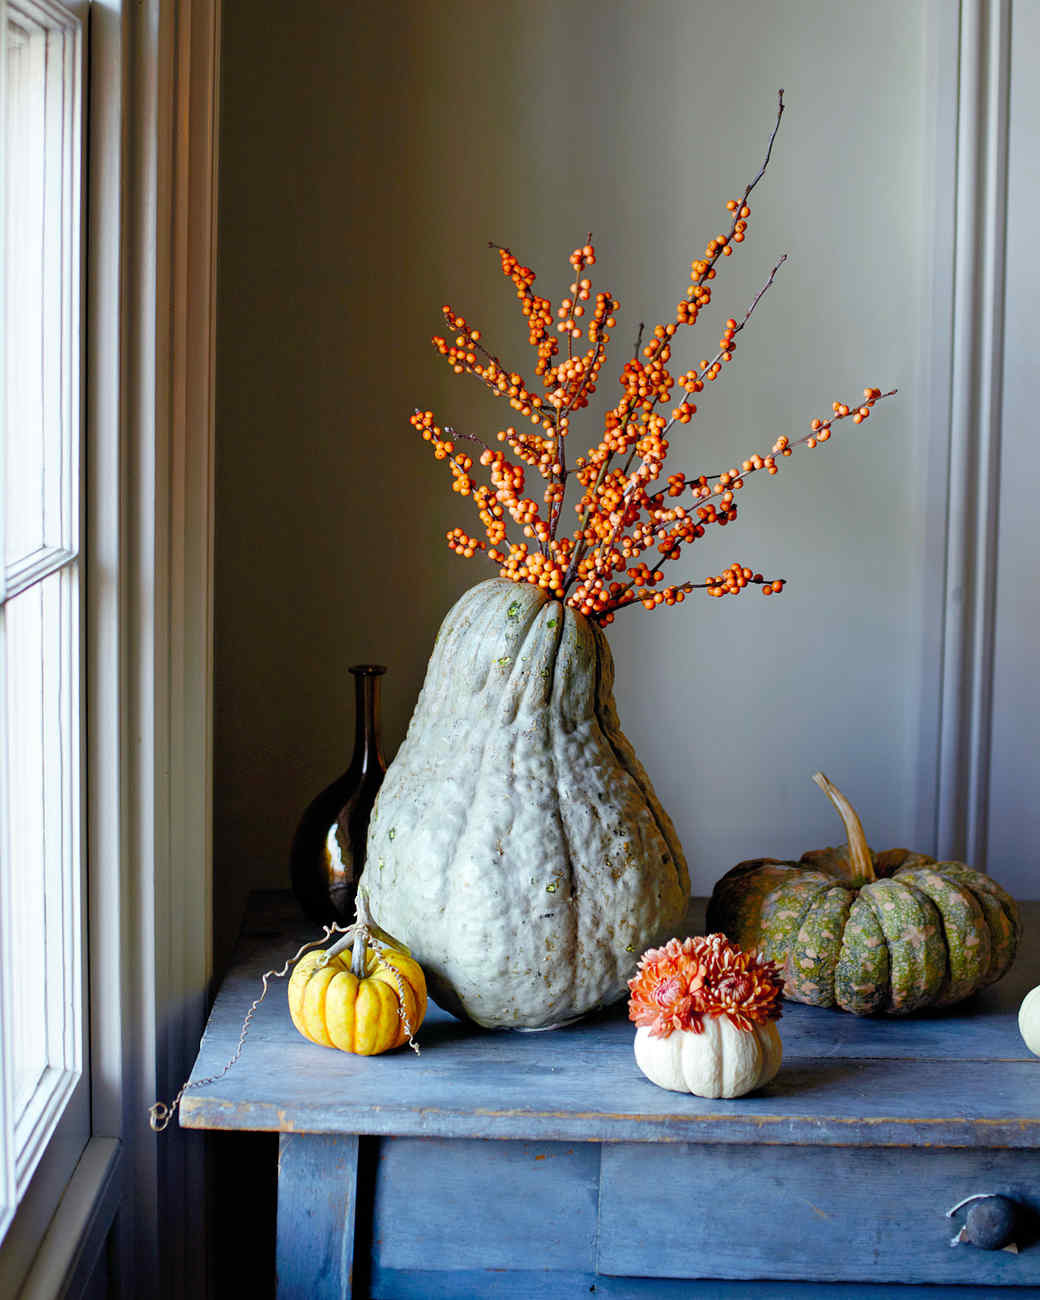 Thanksgiving Table Settings Martha Stewart
 How to Make Squash and Pumpkin Flower Arrangements